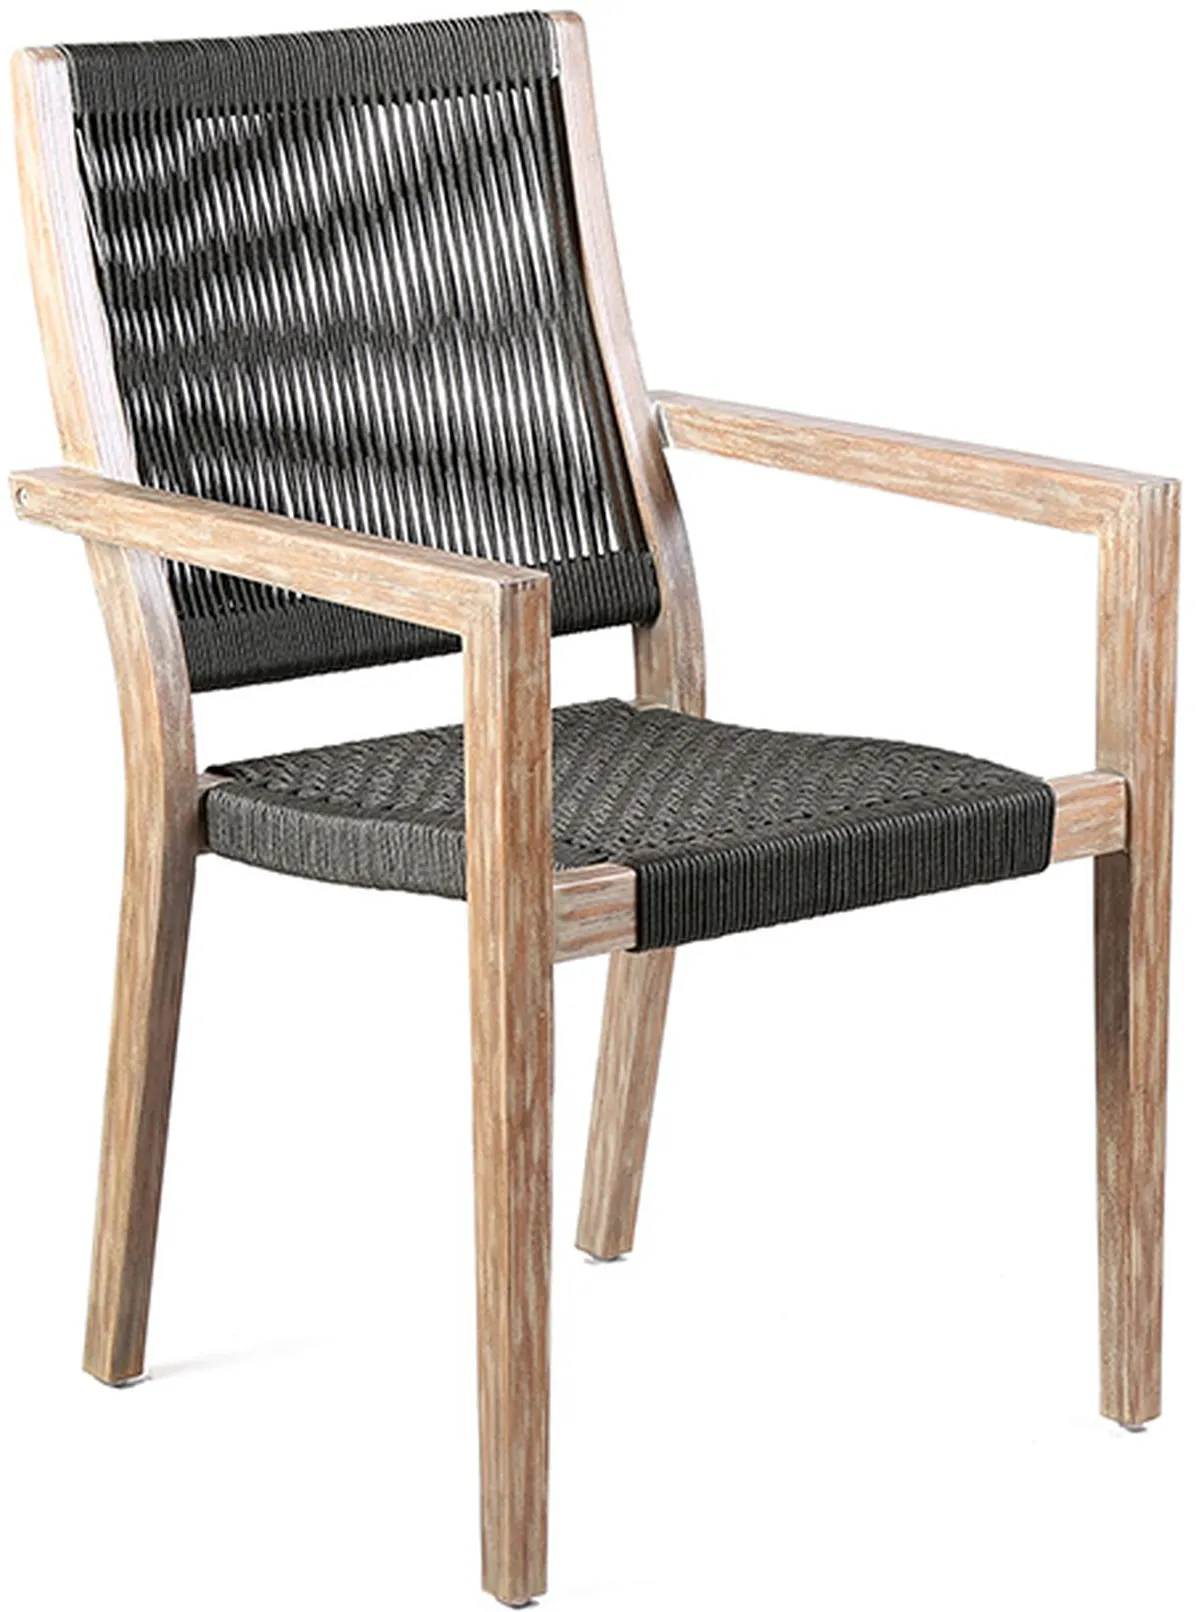 Armen Living Madsen Outdoor Teak Dining Chairs